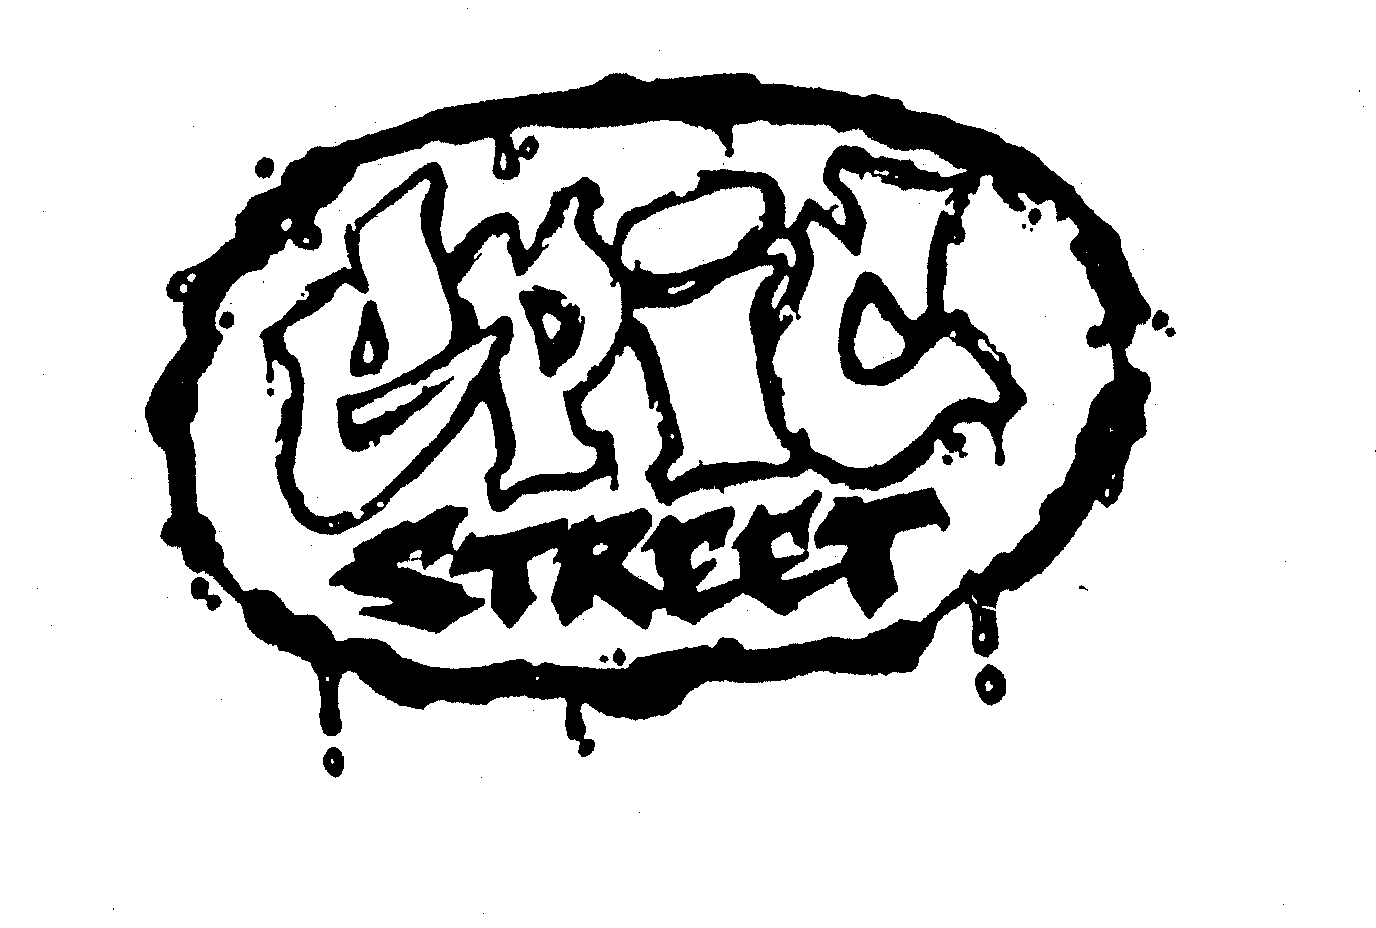  EPIC STREET